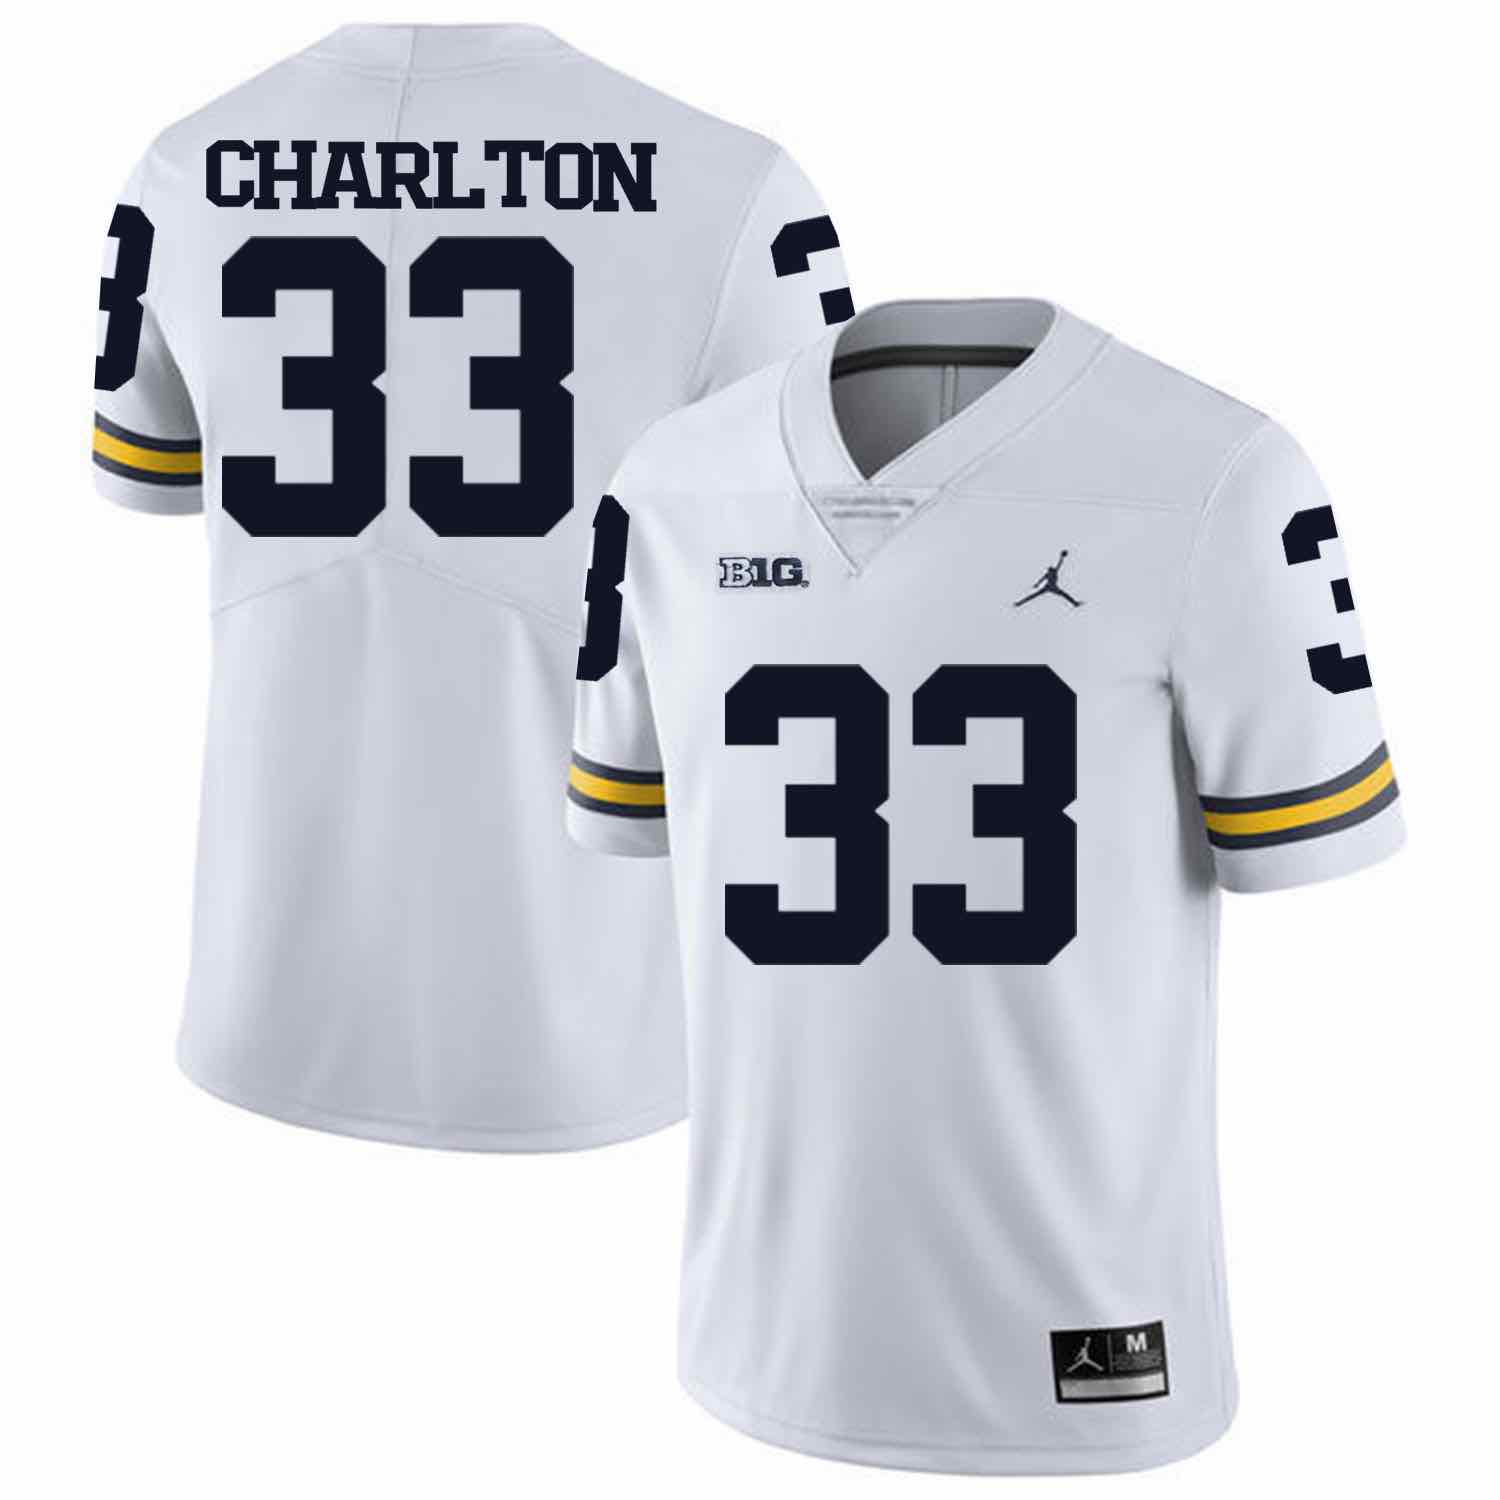 NCAA Michigan Wolverines #33 Charlton White Football Jersey